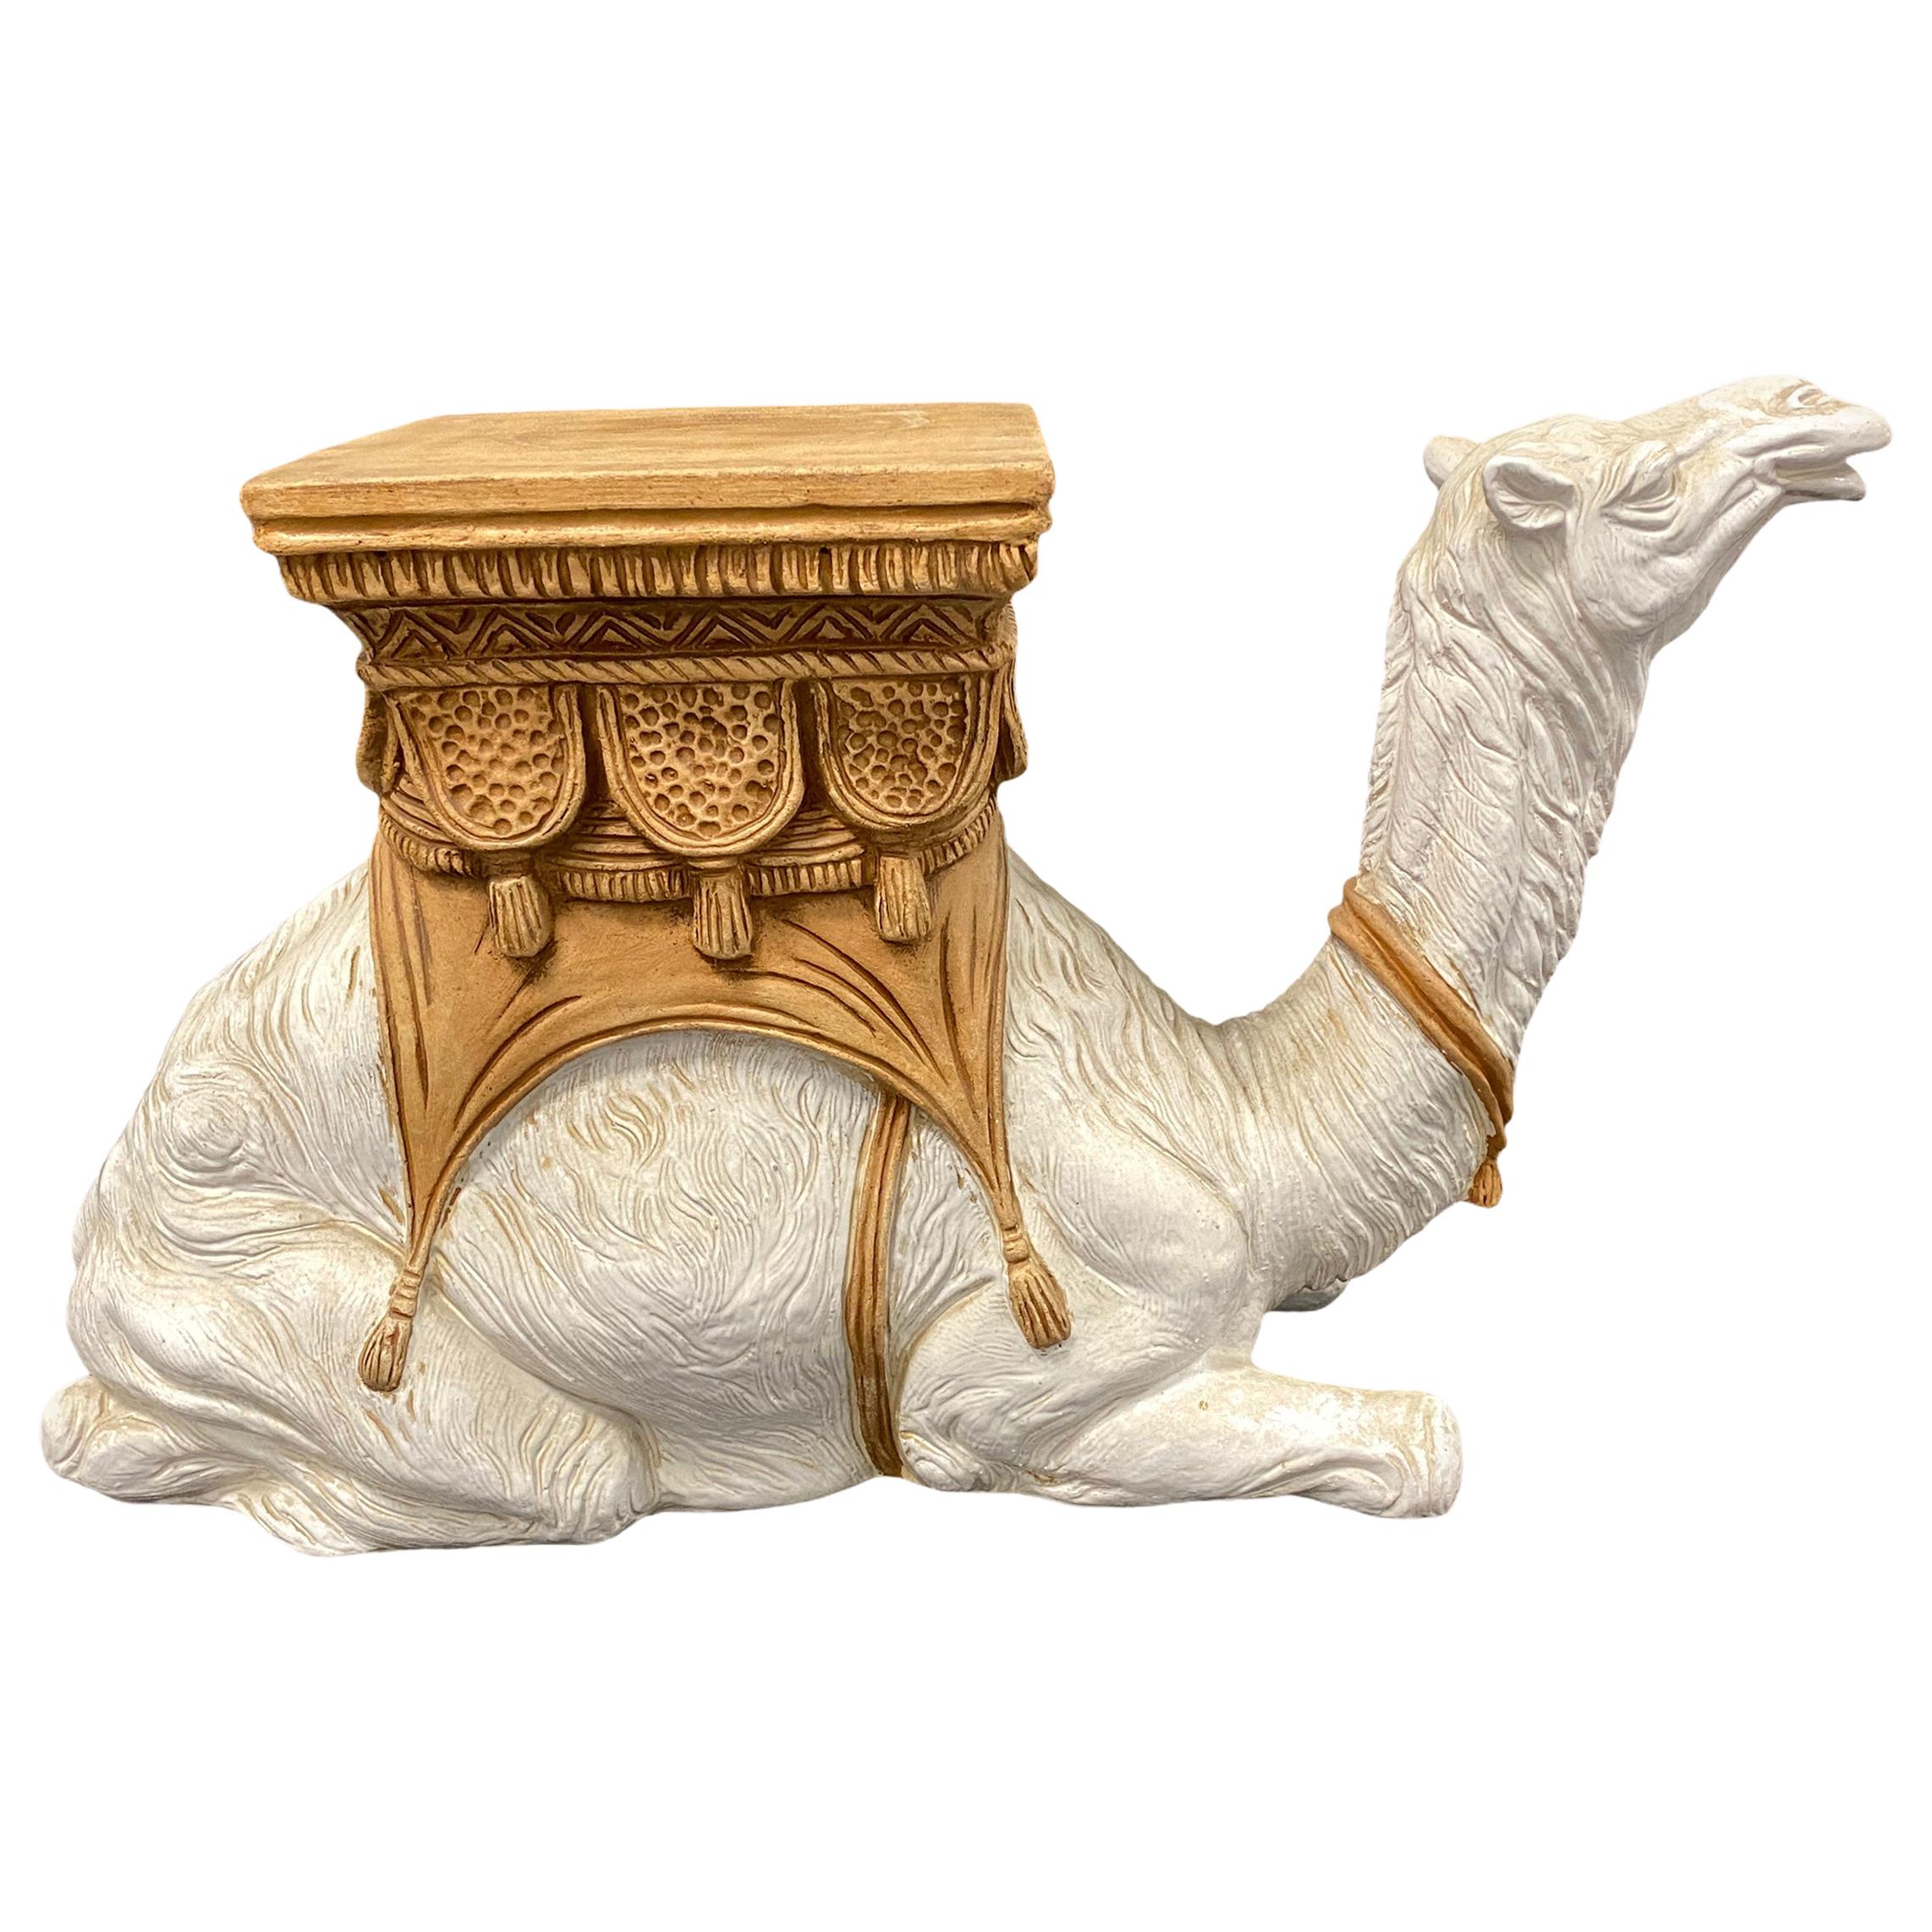 Hollywood Regency Italian Terracotta Camel Garden Stool Plant Stand or Seat